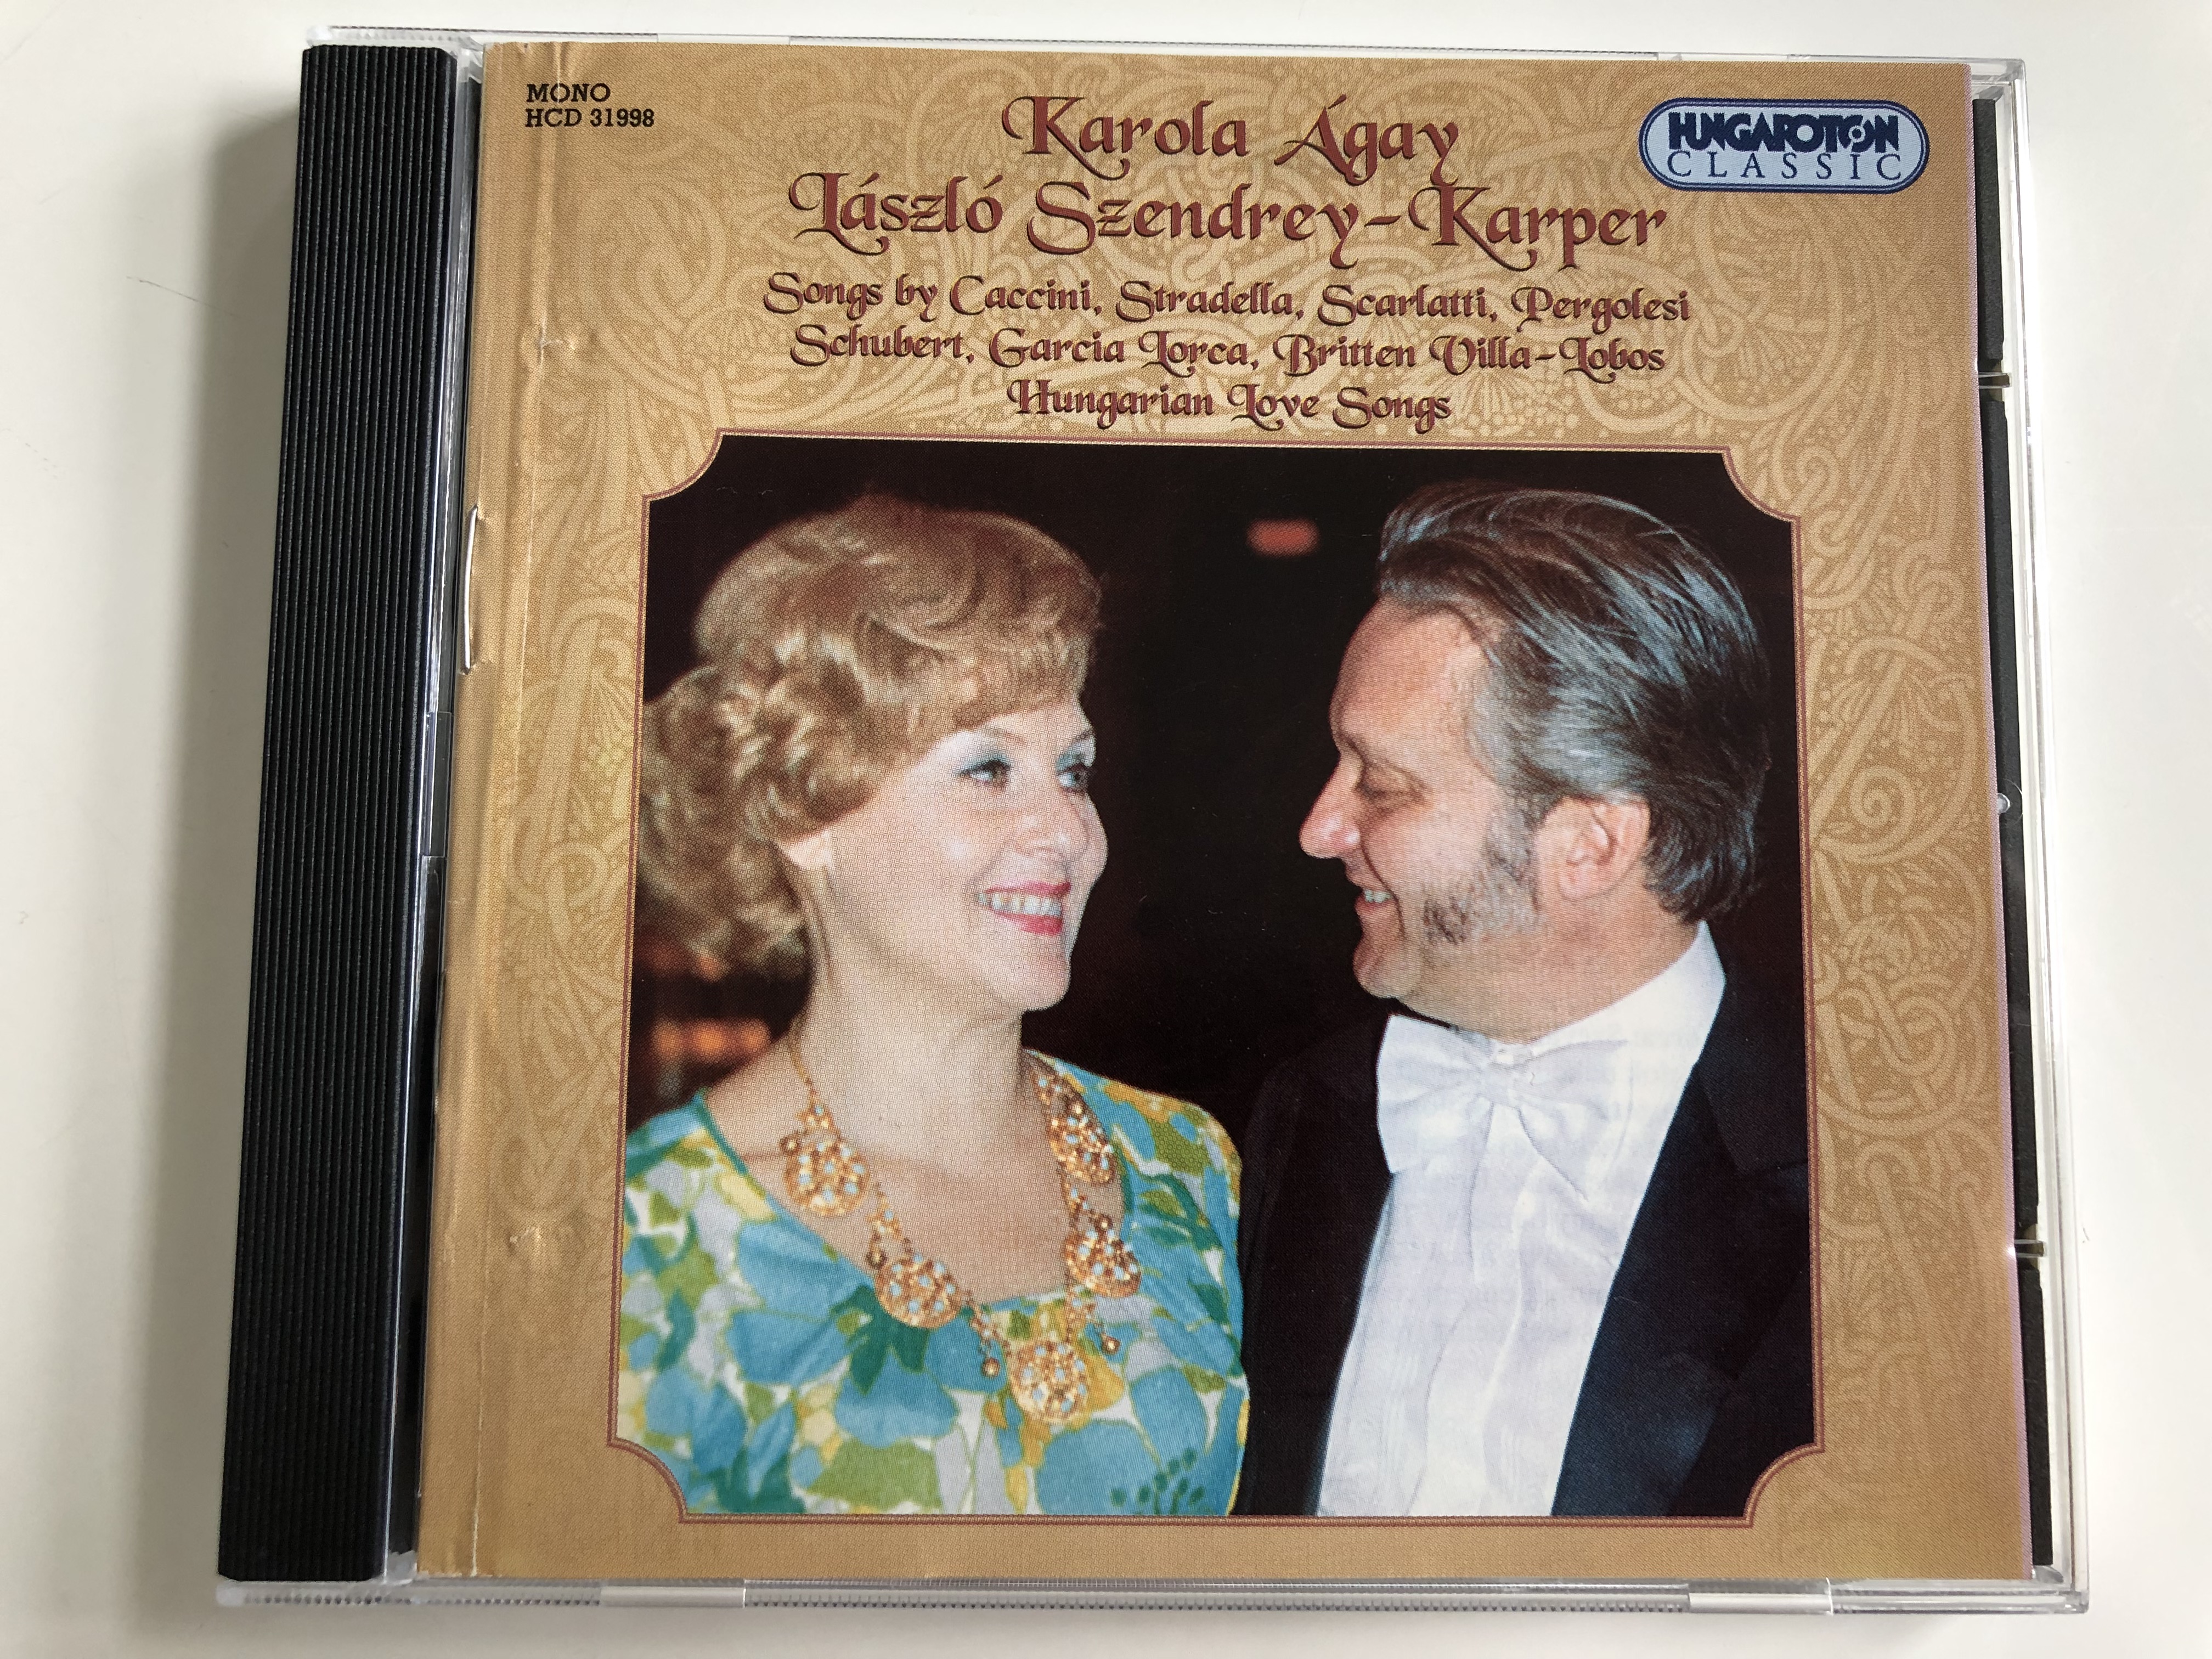 karola-agay-laszlo-szendrey-karper-songs-by-caccini-stradella-scarlatti-pergolesi-schubert-garcia-lorca-britten-villa-lobos-hungarian-love-songs-hungaroton-audio-cd-2000-mono-hcd-319-1-.jpg